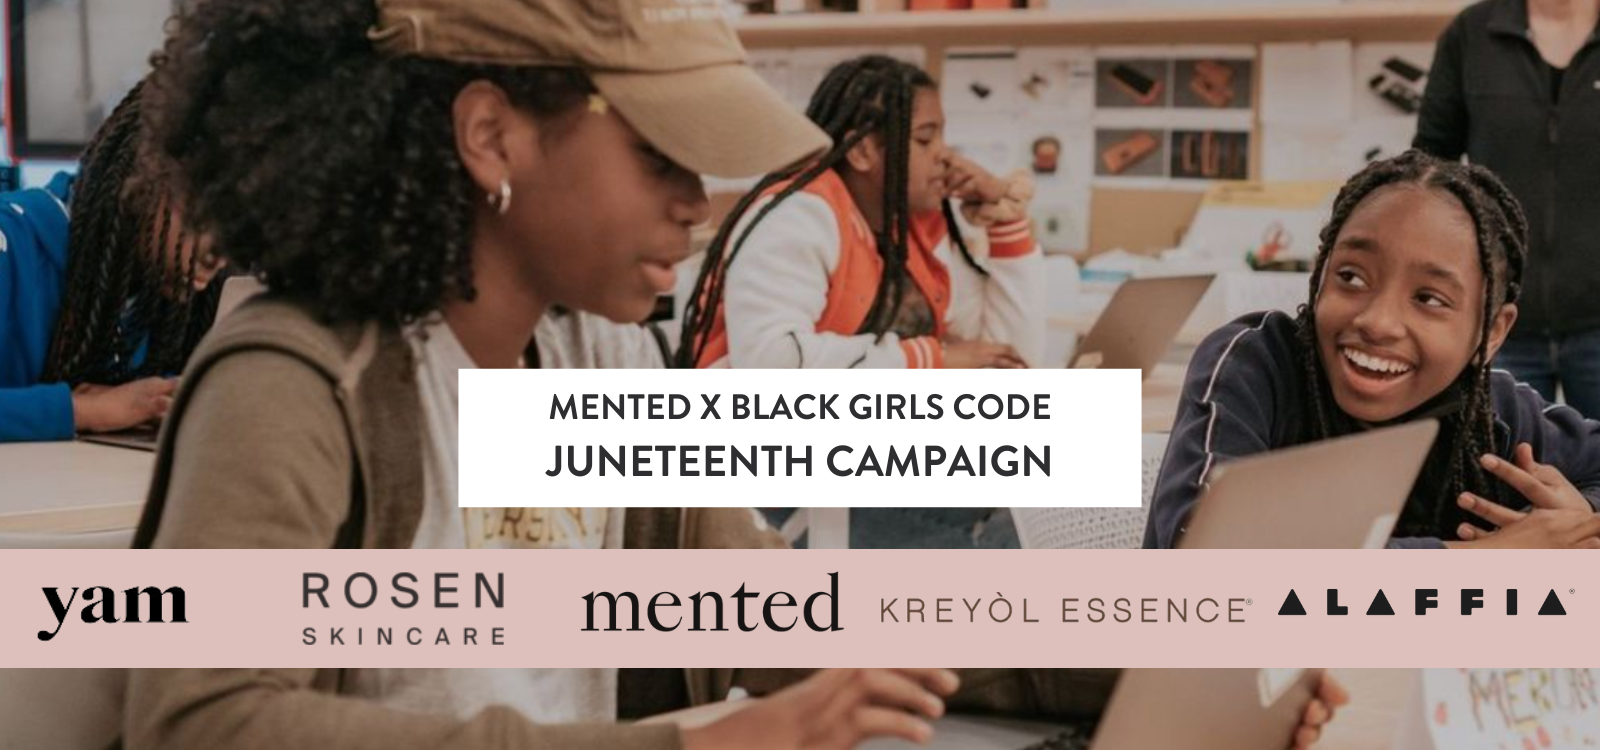 Juneteenth Campaign: Black Girls Code